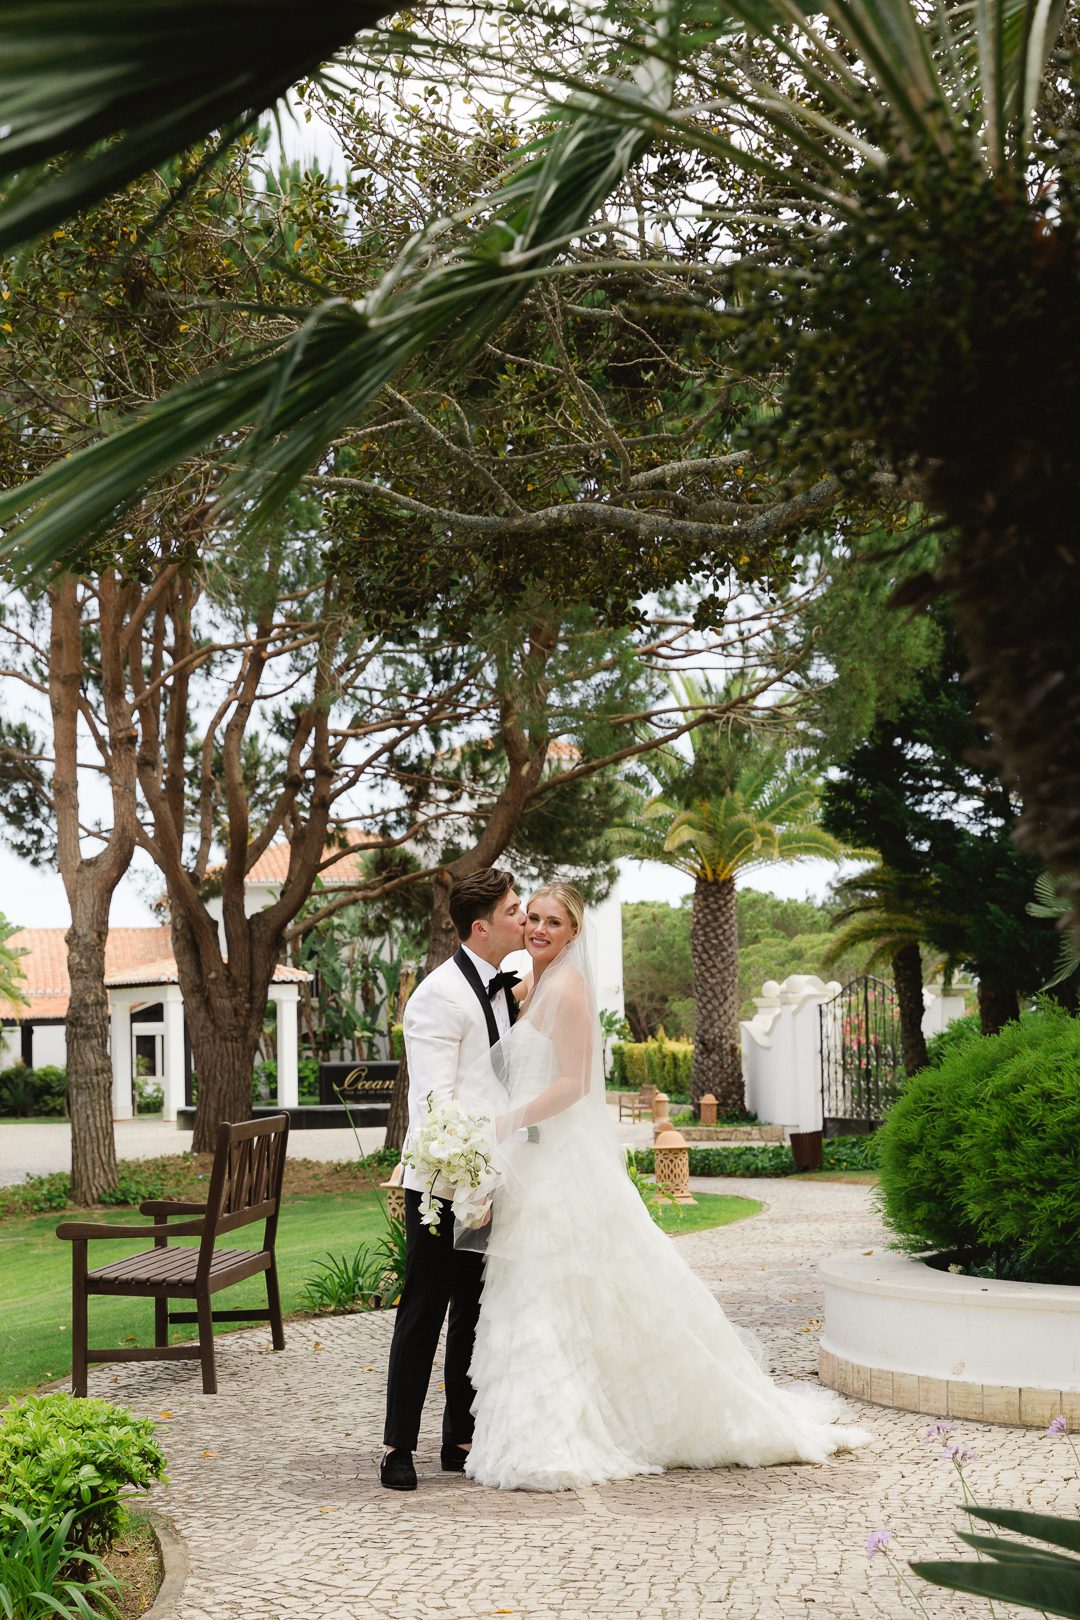 editorial wedding photography, fashion wedding photography, emotive wedding photography, Portugal wedding, Algarve wedding, vila vita Parc wedding, wedding inspiration